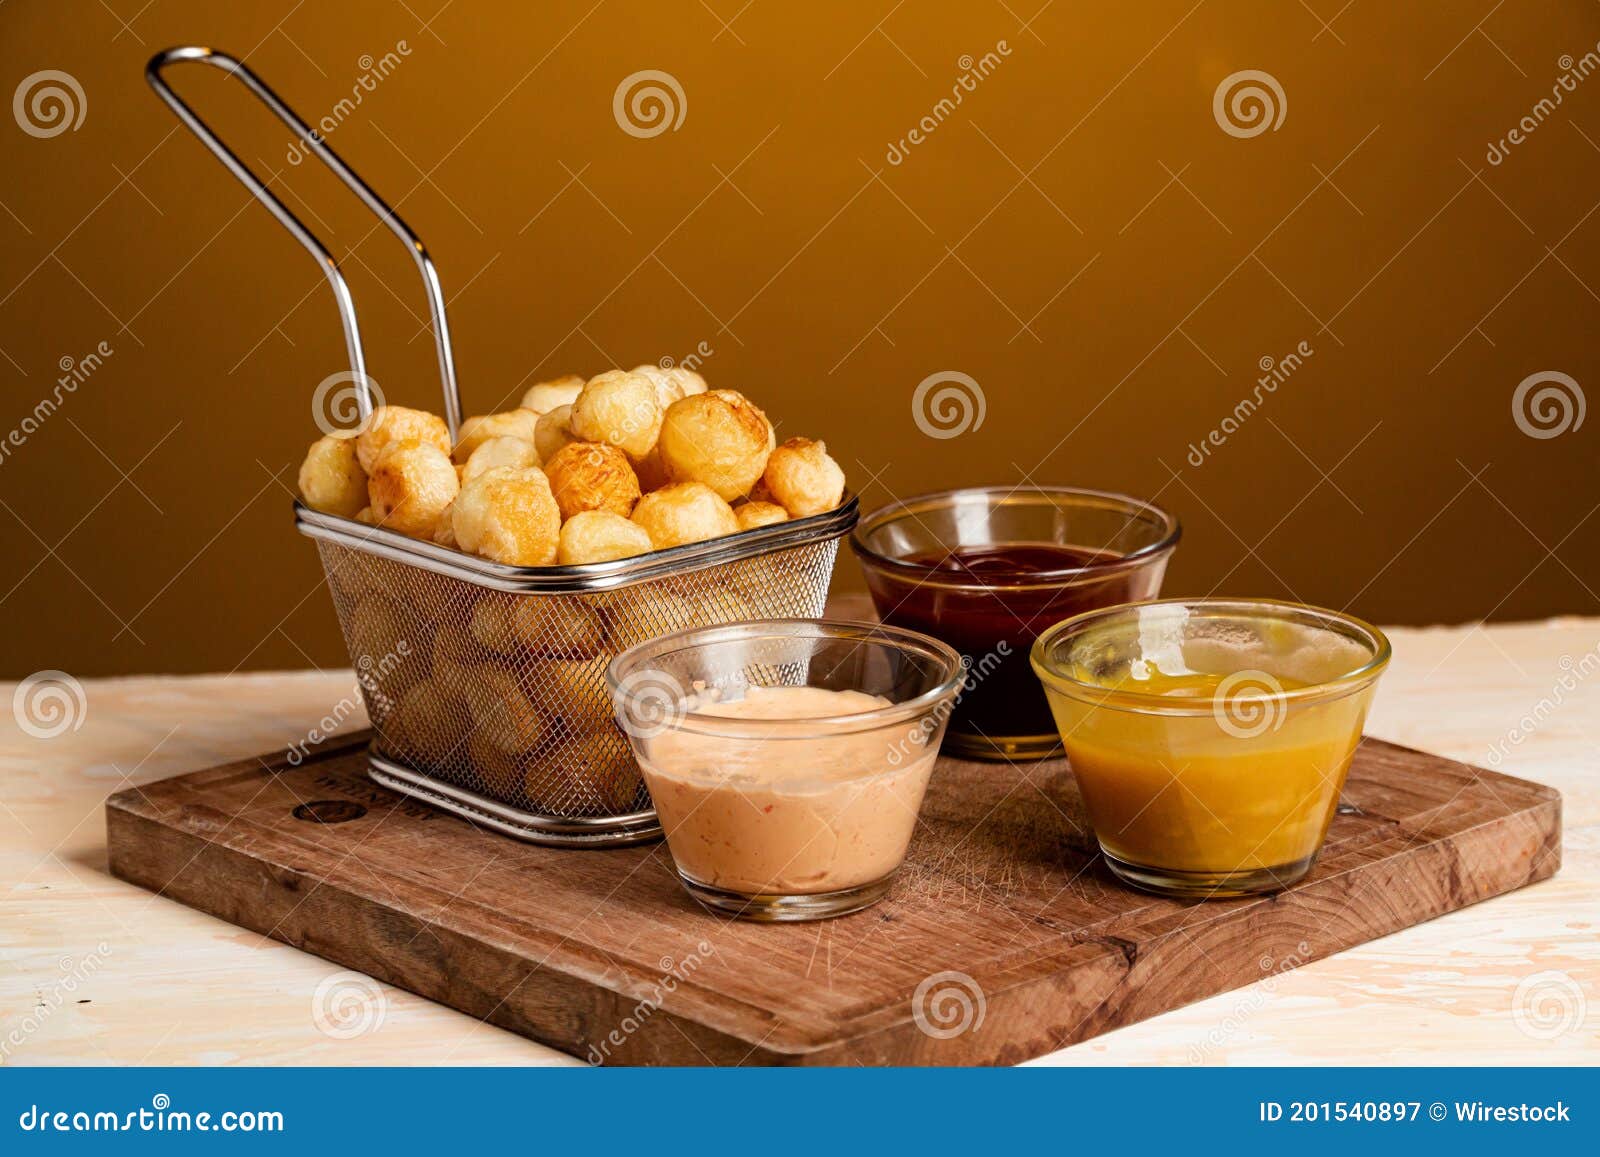 closeup shot of noisette potatoes with various sauces shot of